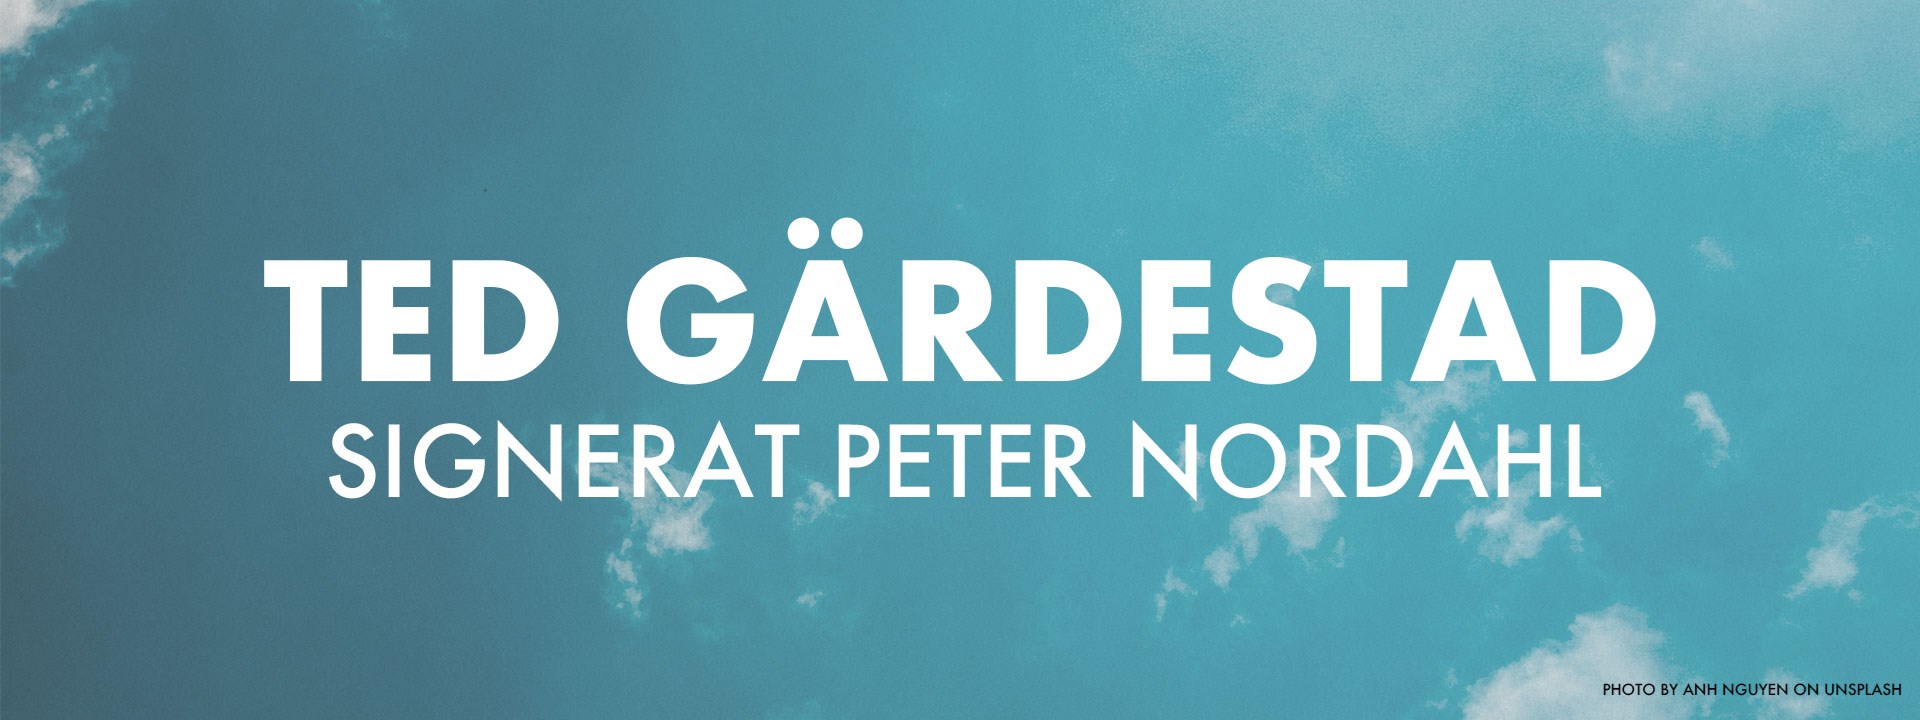 Ted Gärdestad - Signerat Peter Nordahl